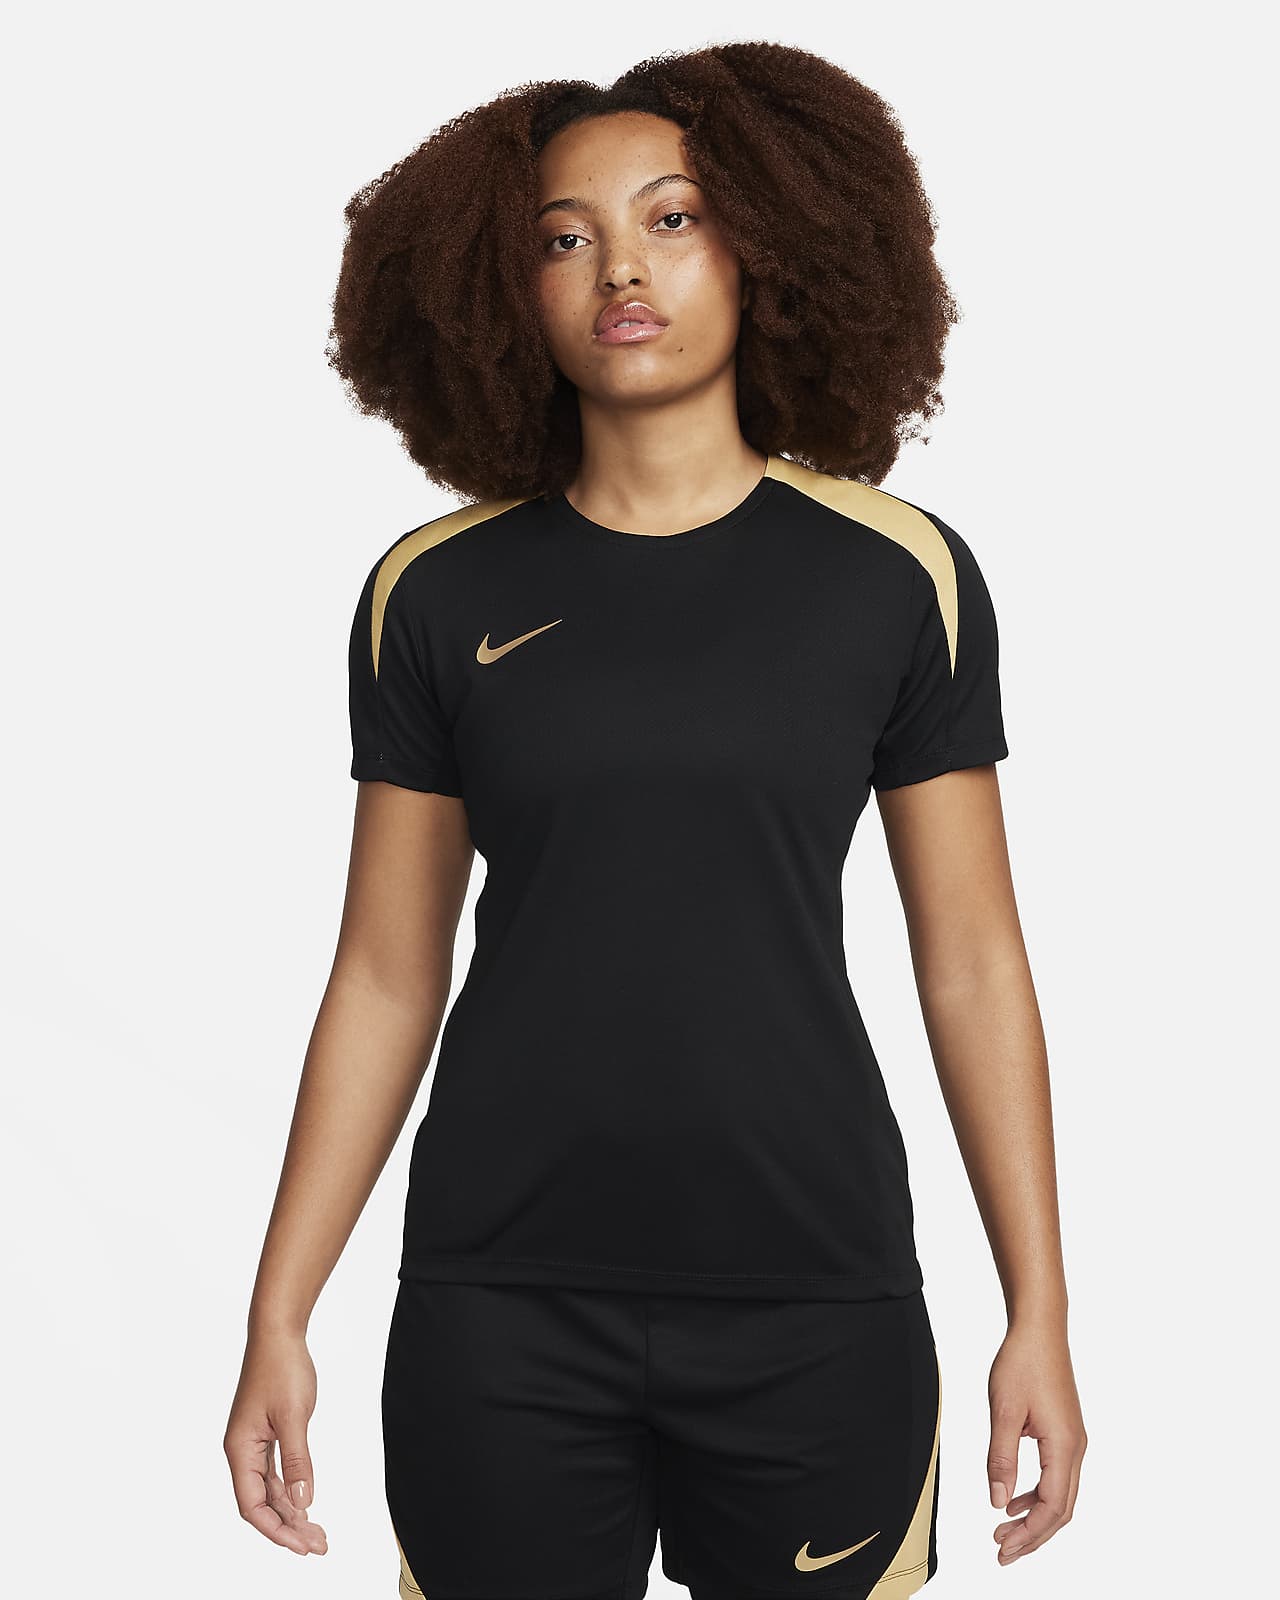 Damska koszulka piłkarska z krótkim rękawem Dri-FIT Nike Strike